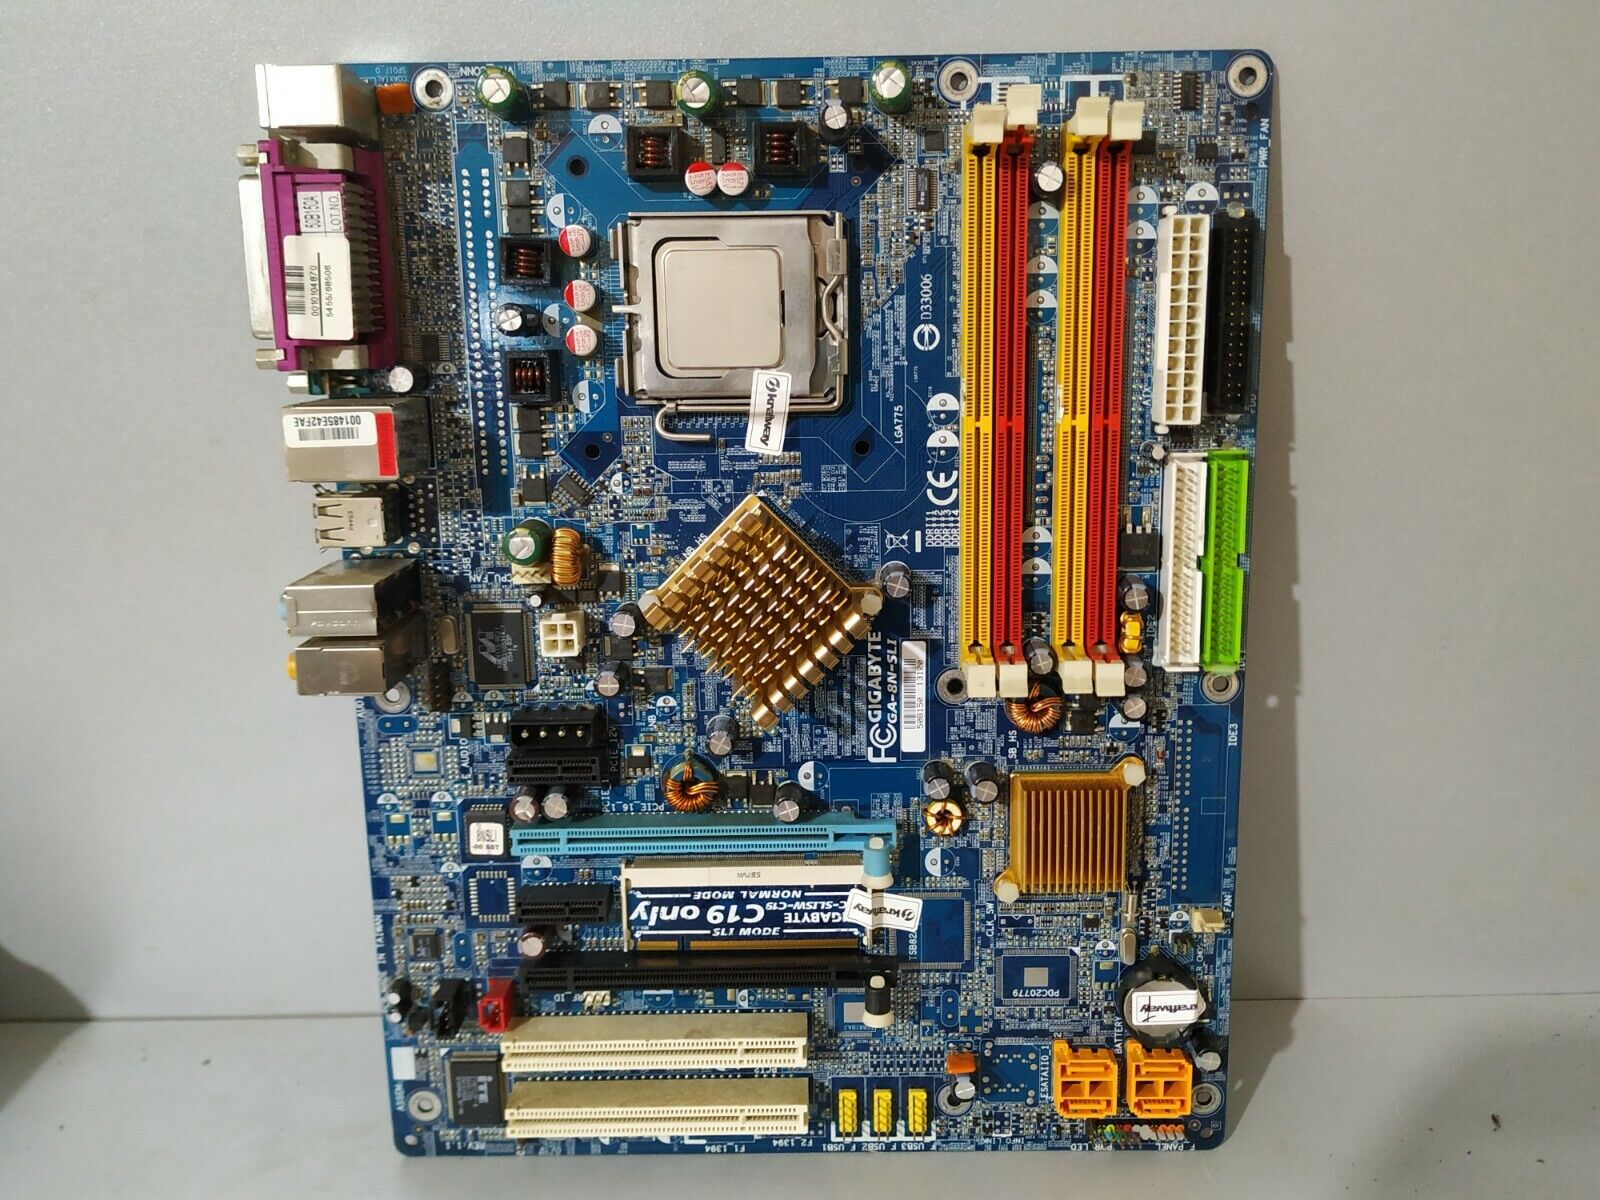 GIgabyte GA-8N-SLI LGA775 motherboard + CPU Pentium4 531 3.00 GHZ